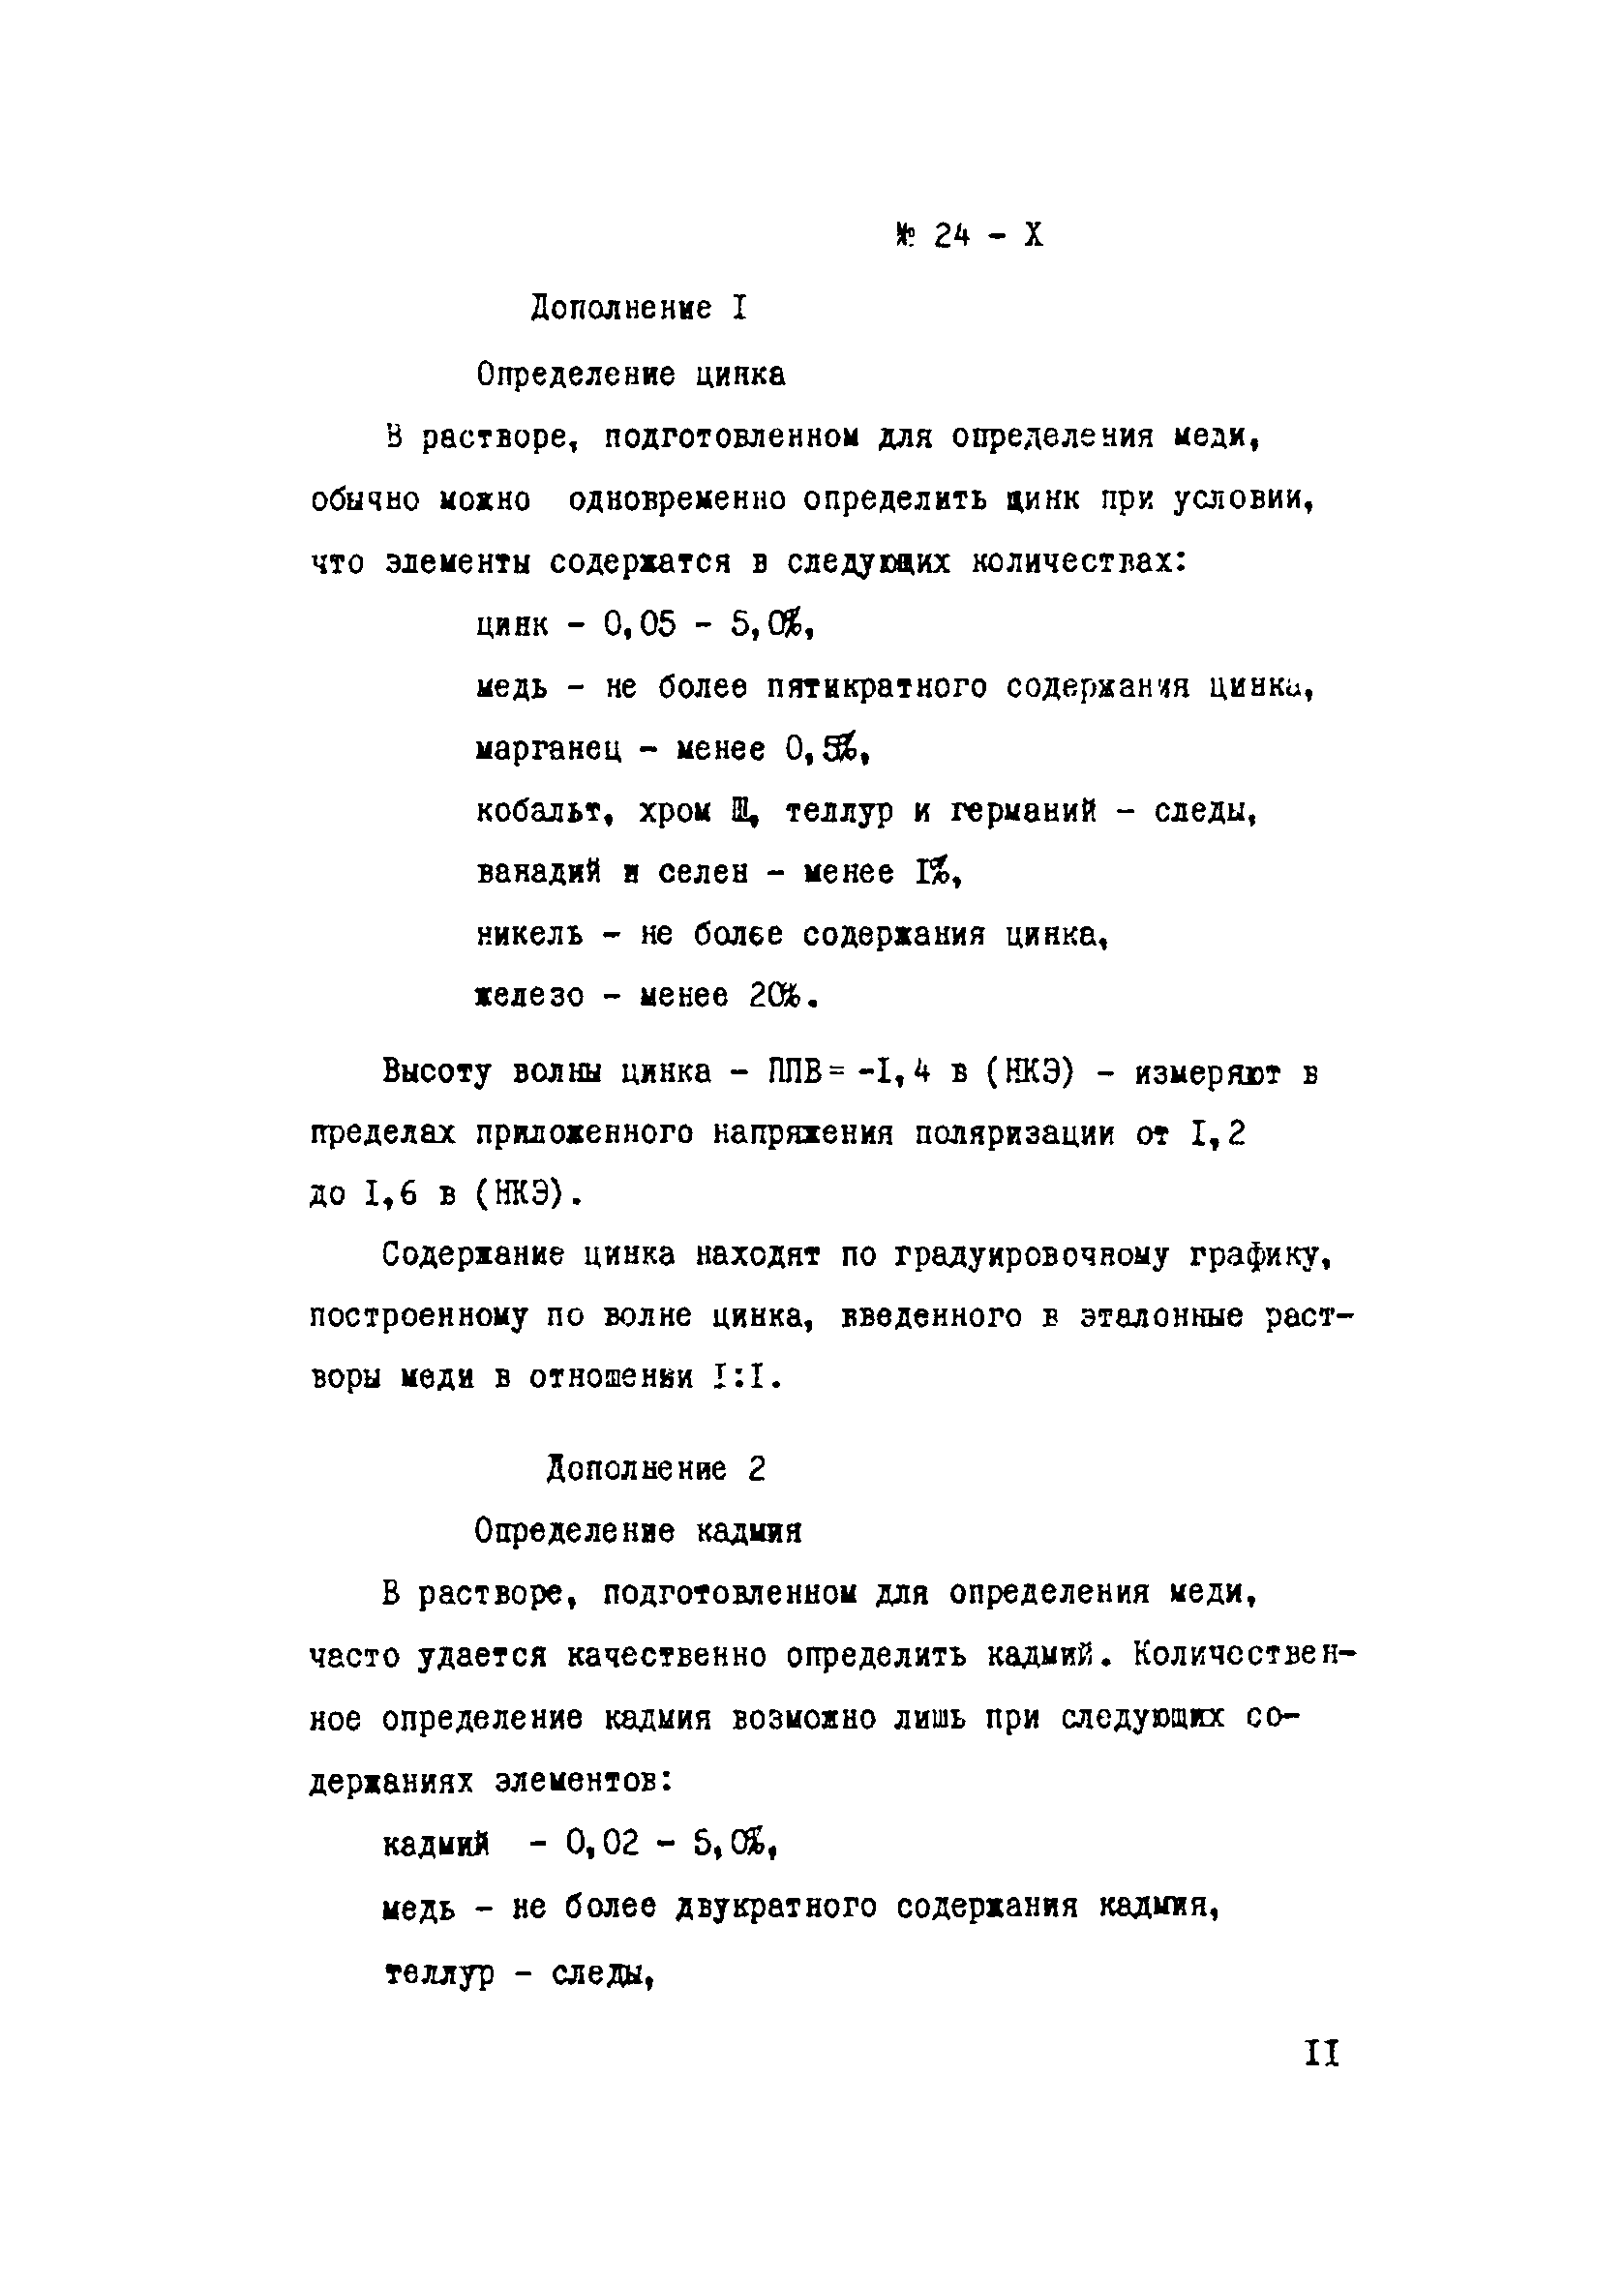 Инструкция НСАМ 24-Х